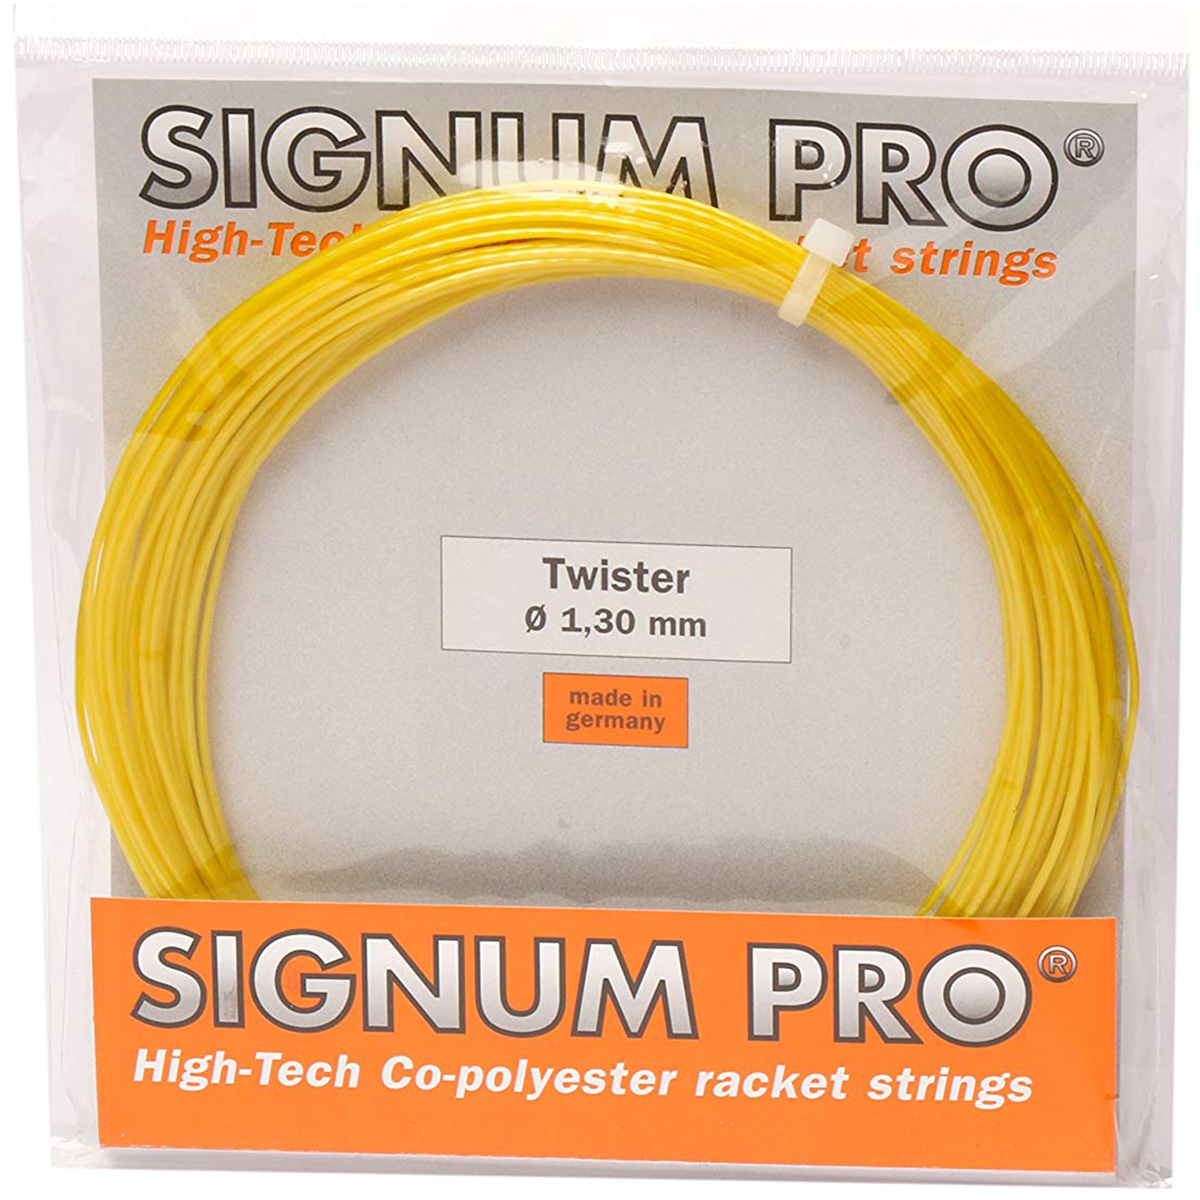 Signum Pro Twister 16 String Set (12 m) - Yellow 